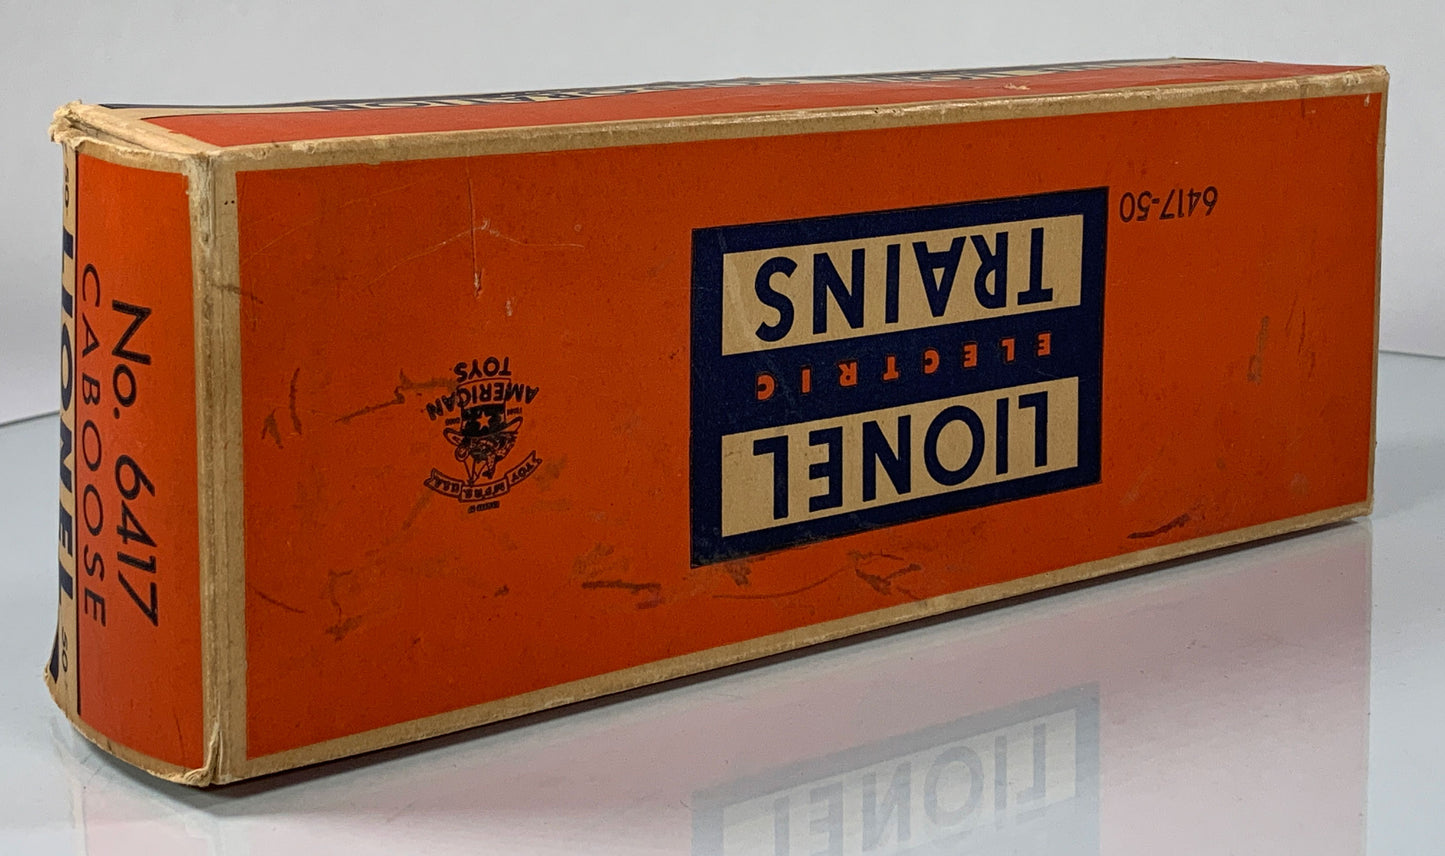 LIONEL • O GAUGE • 1954 Postwar 6417-50 Illuminated Lehigh Valley Caboose • Original Box • EXCELLENT COND